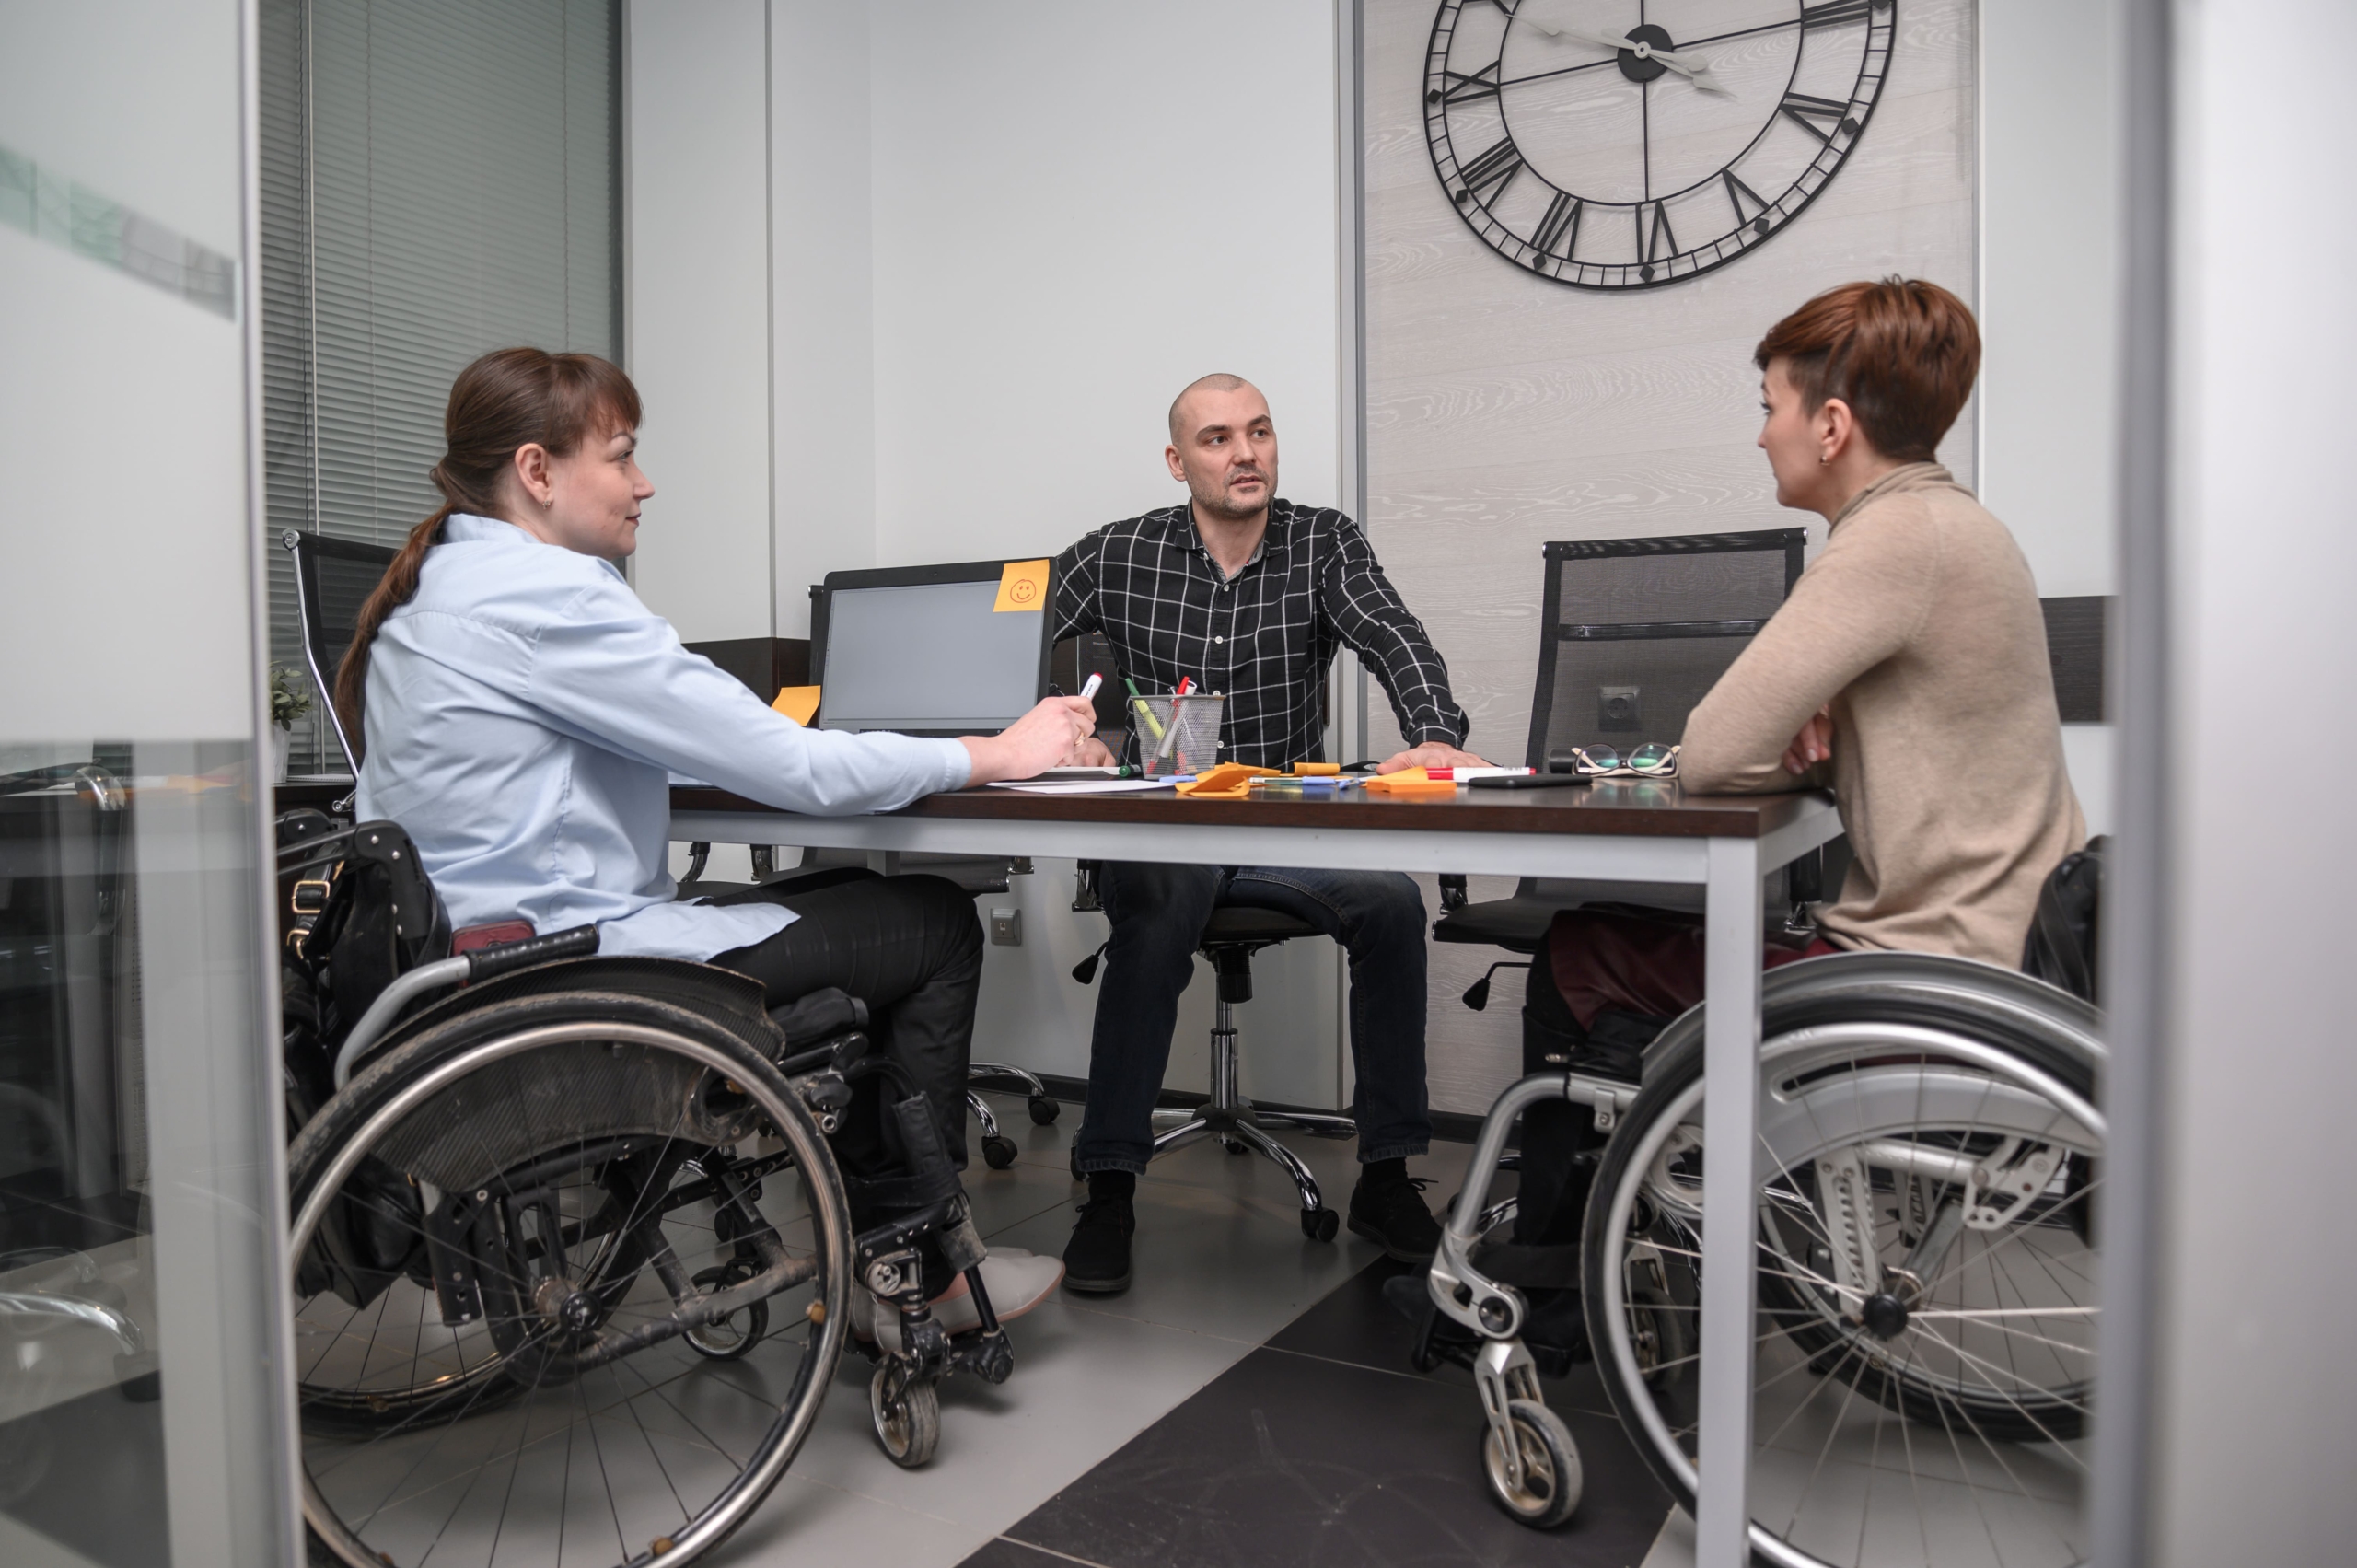 integrated accessibility standards regulation (IASR)